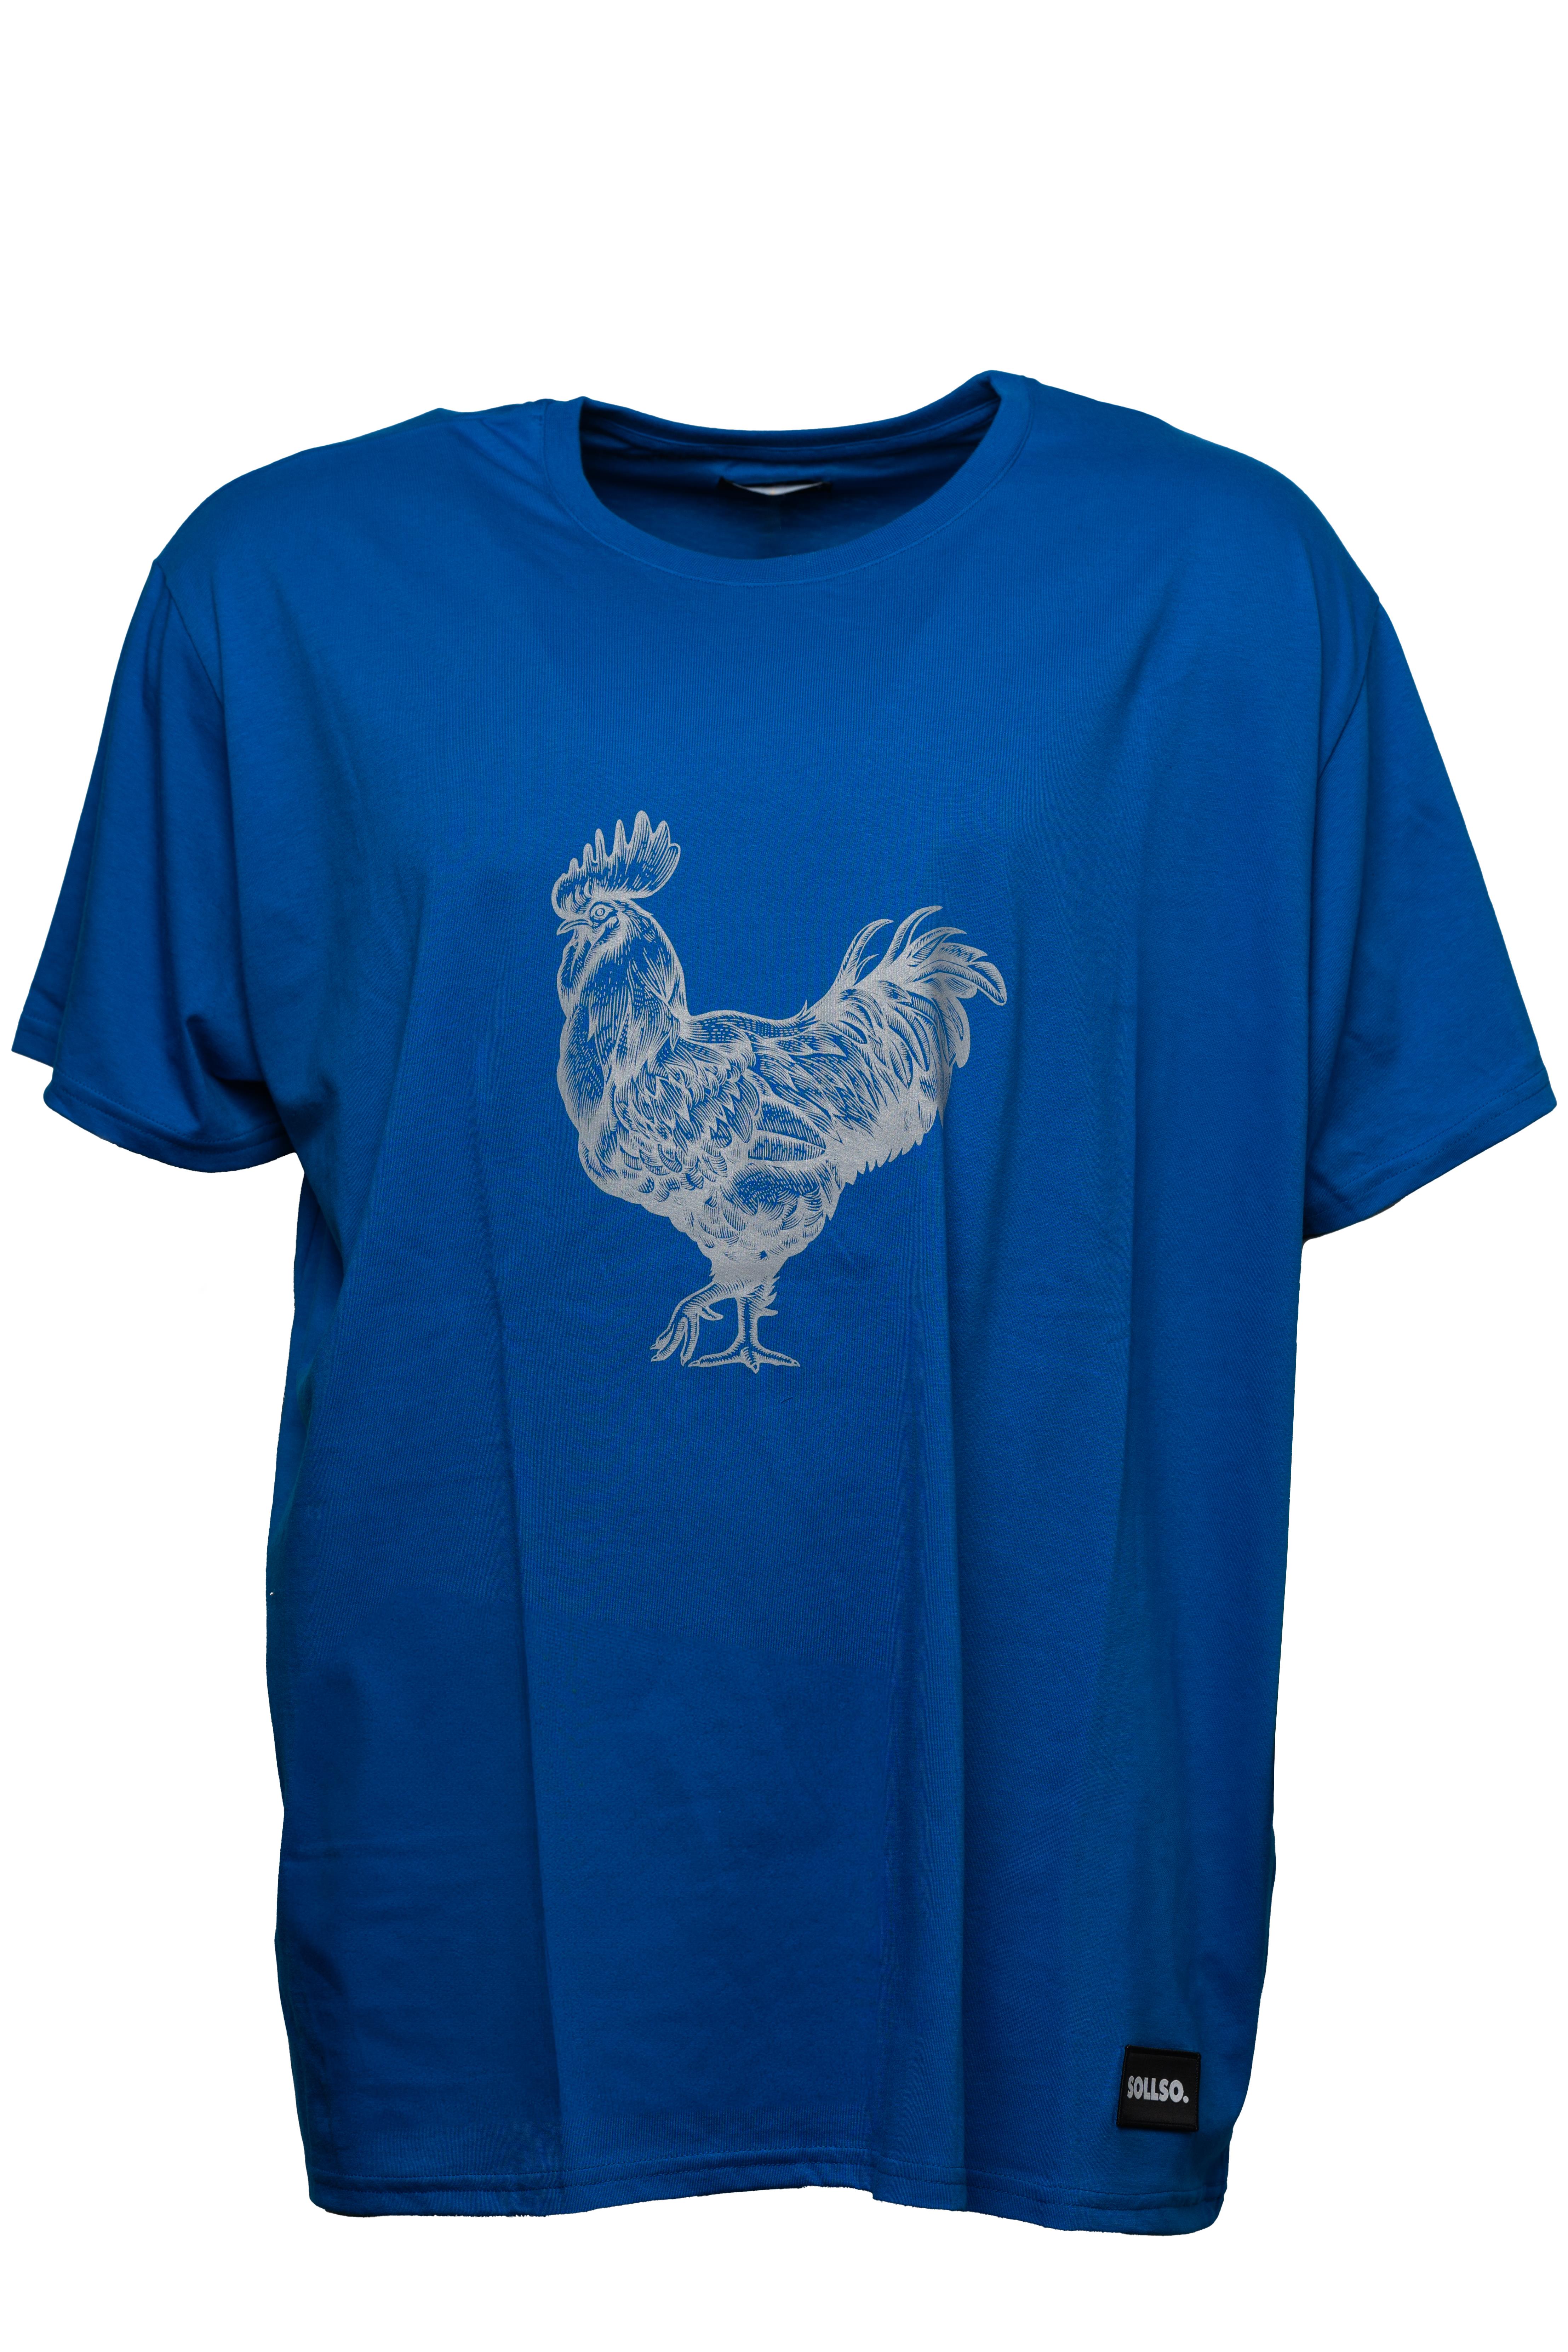 SOLLSO. T-Shirt "Rooster", Farbe Ocean Blue, Größe 5XL